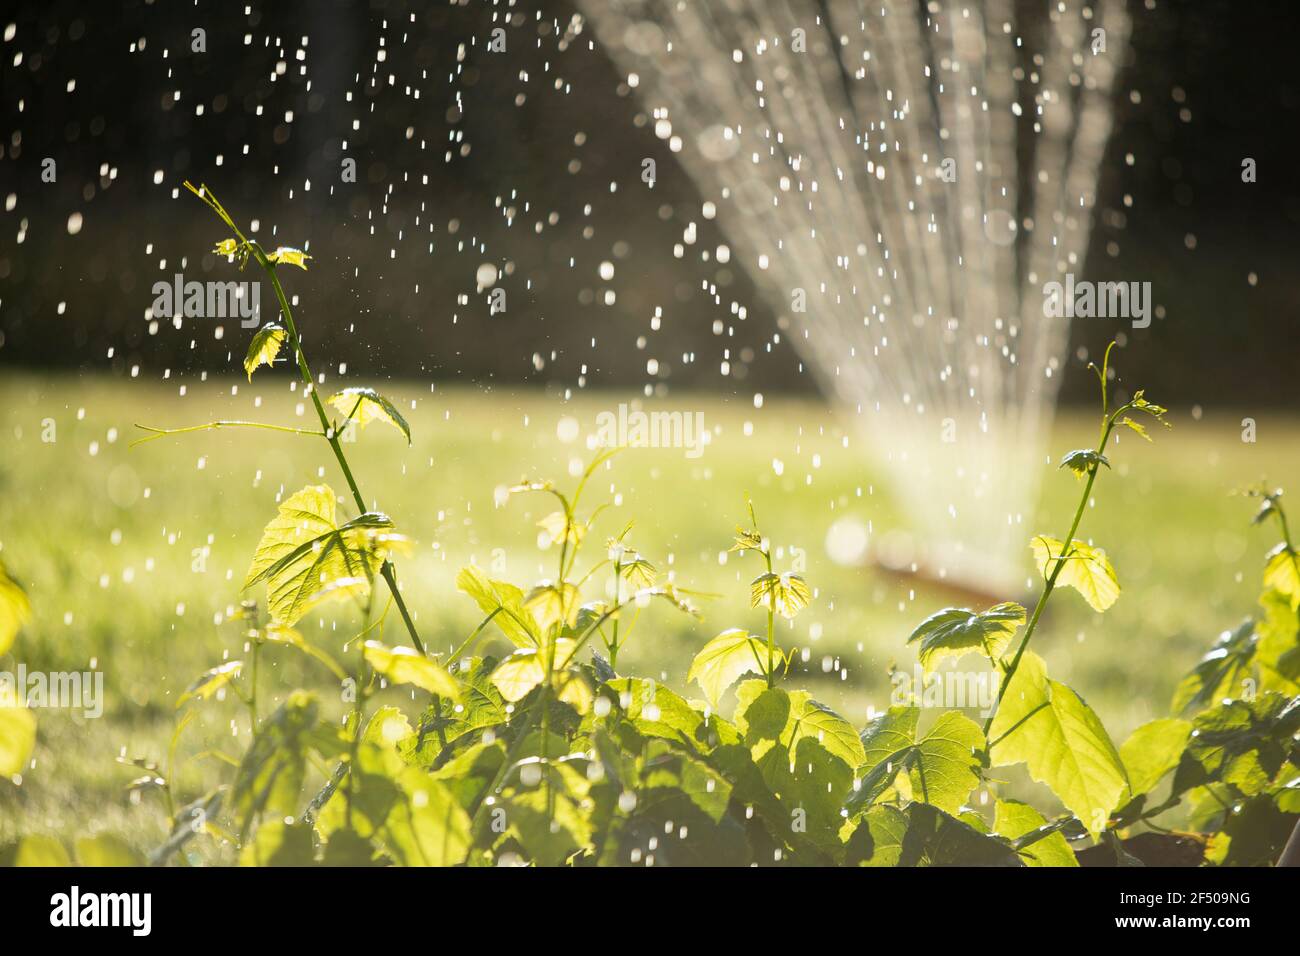 Sprinkler watering lush green plants in sunny summer garden Stock Photo